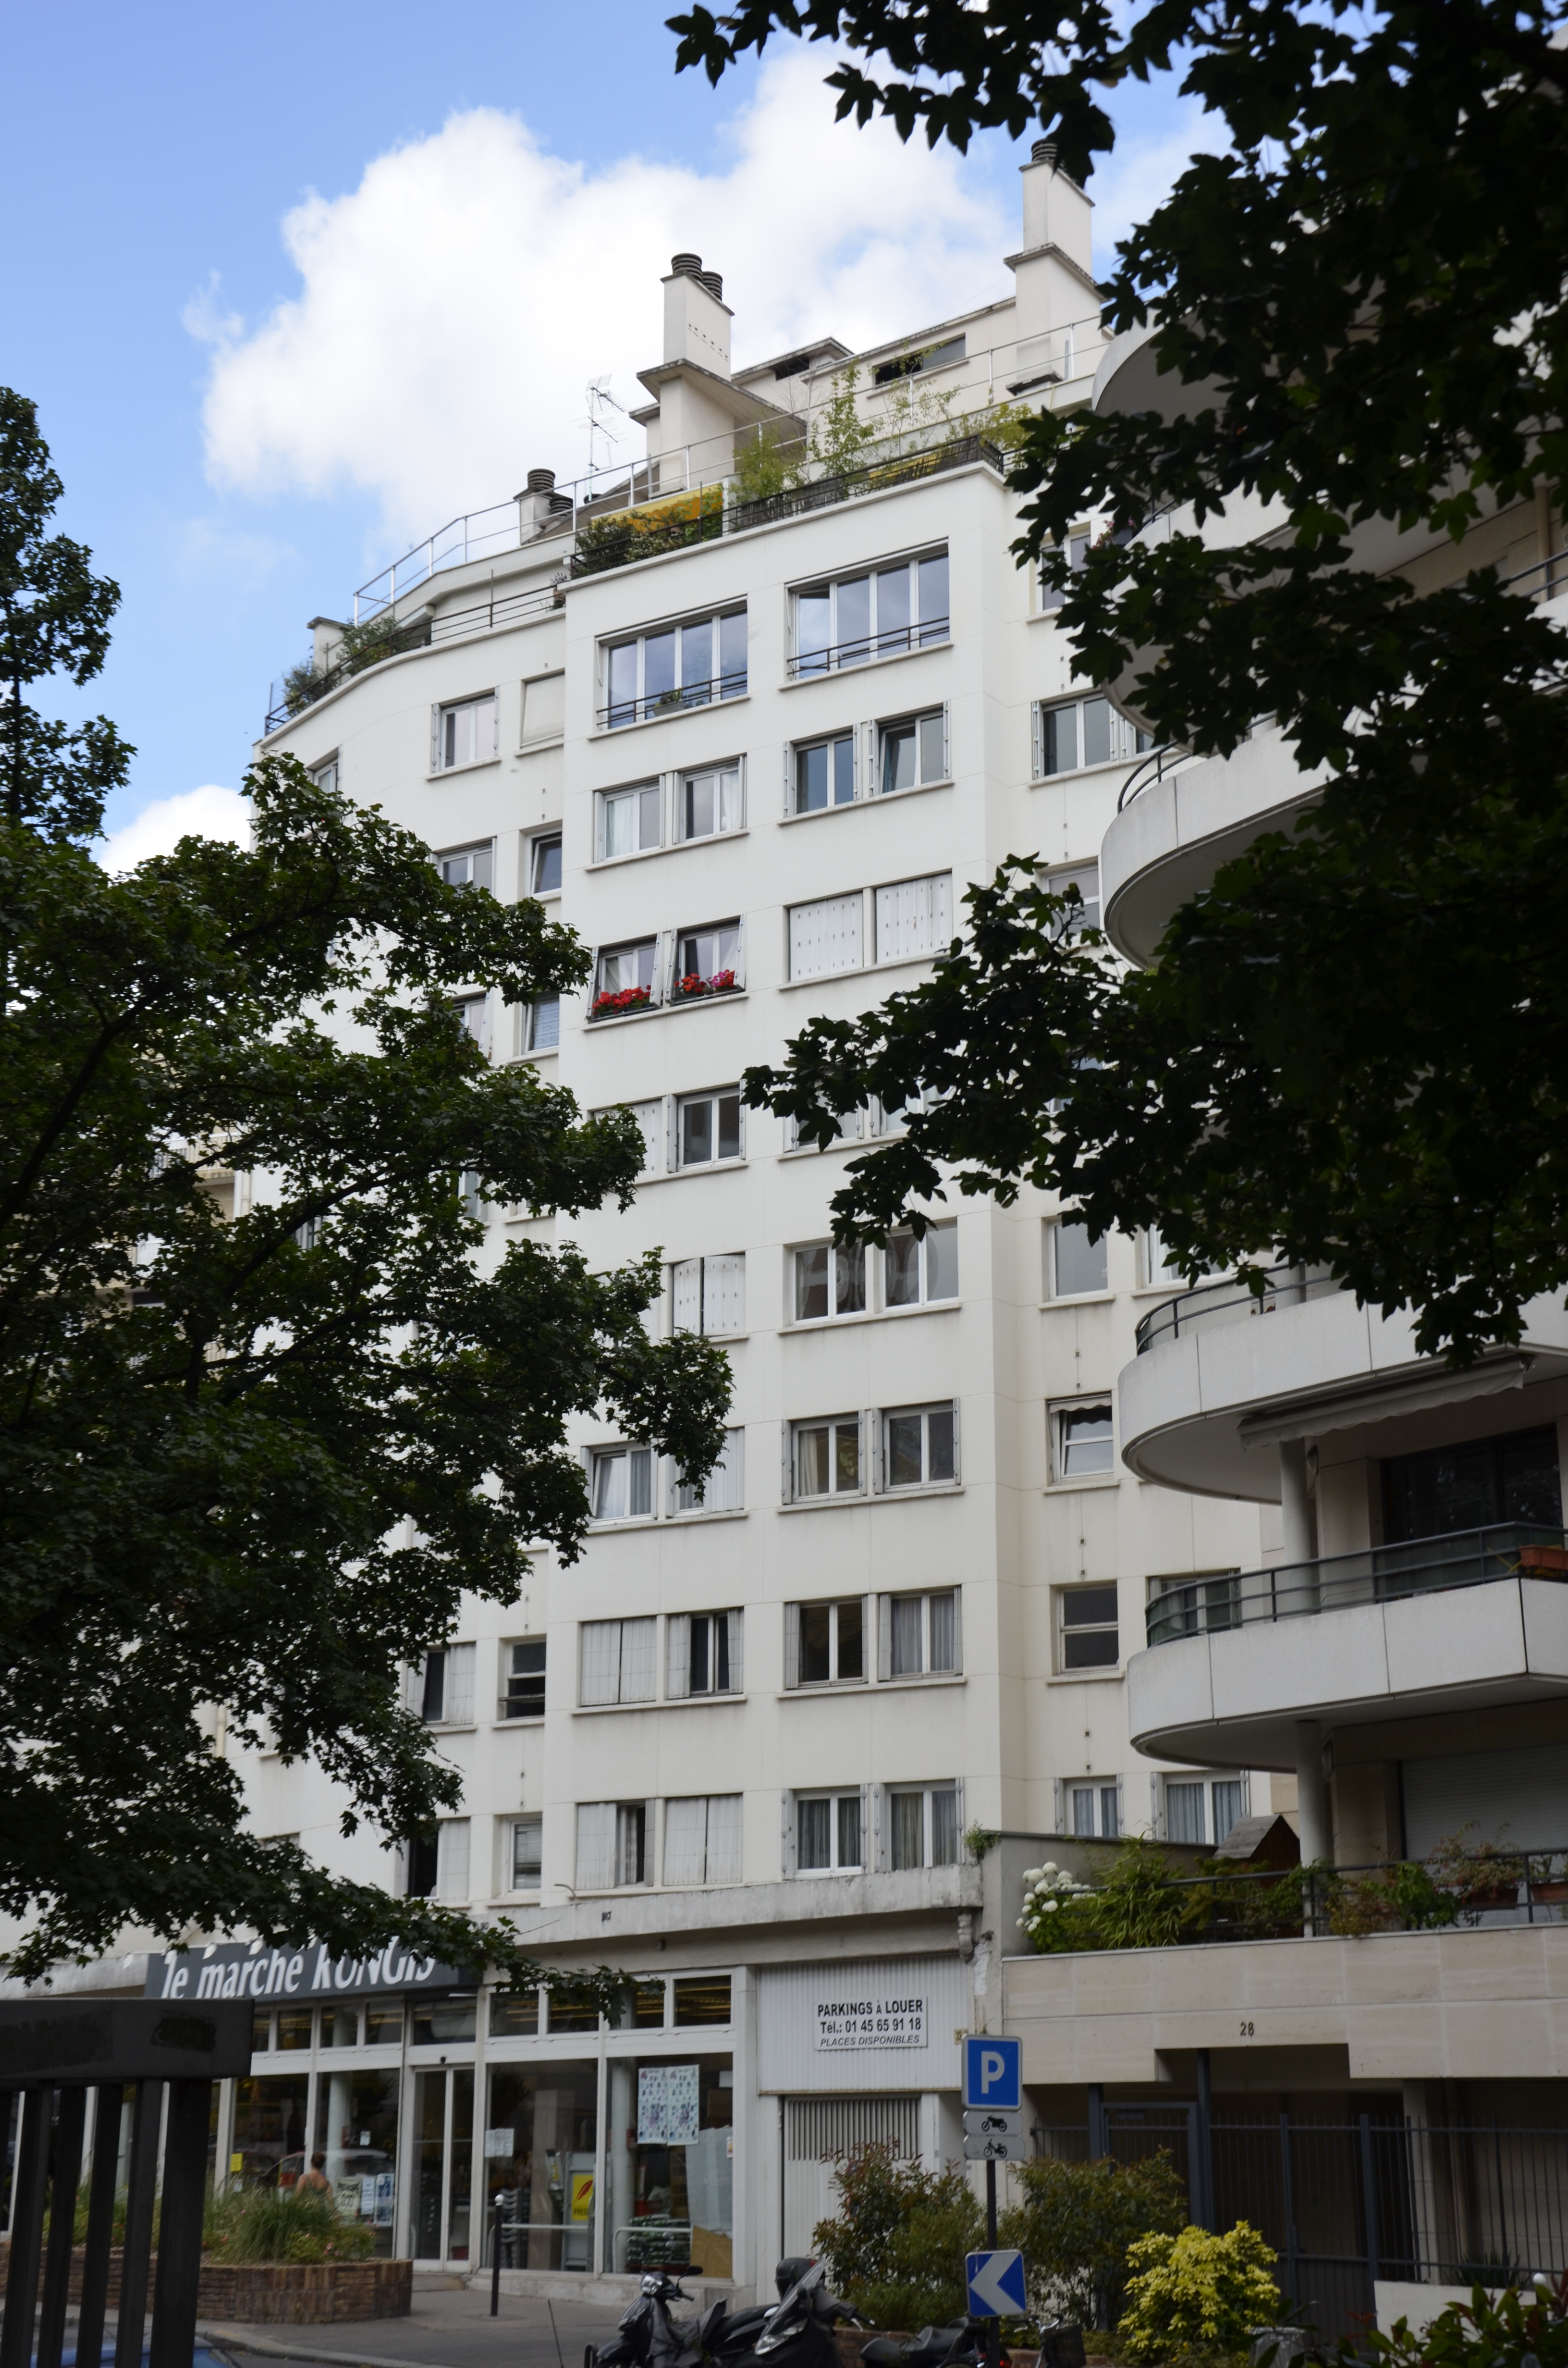 Paris condominium slated for energy efficiency work